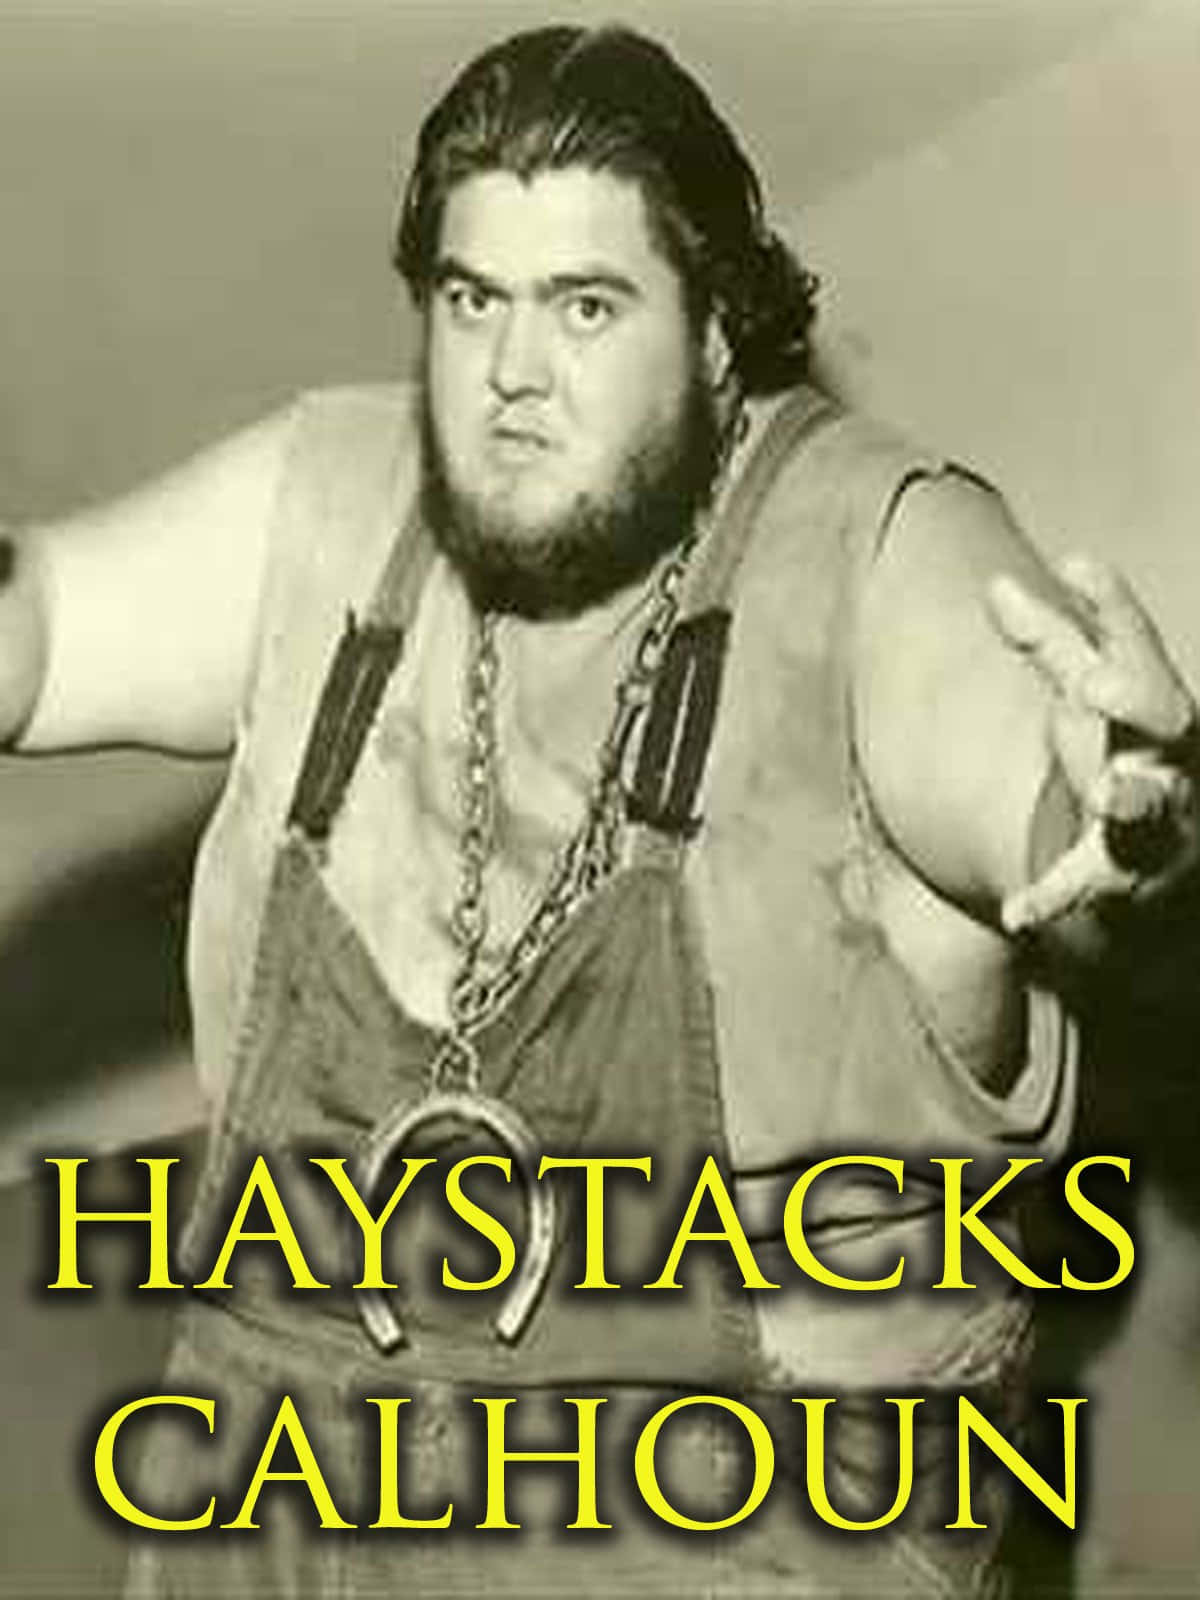 American Professional Wrestler Haystacks Calhoun Old Photo Session Wallpaper